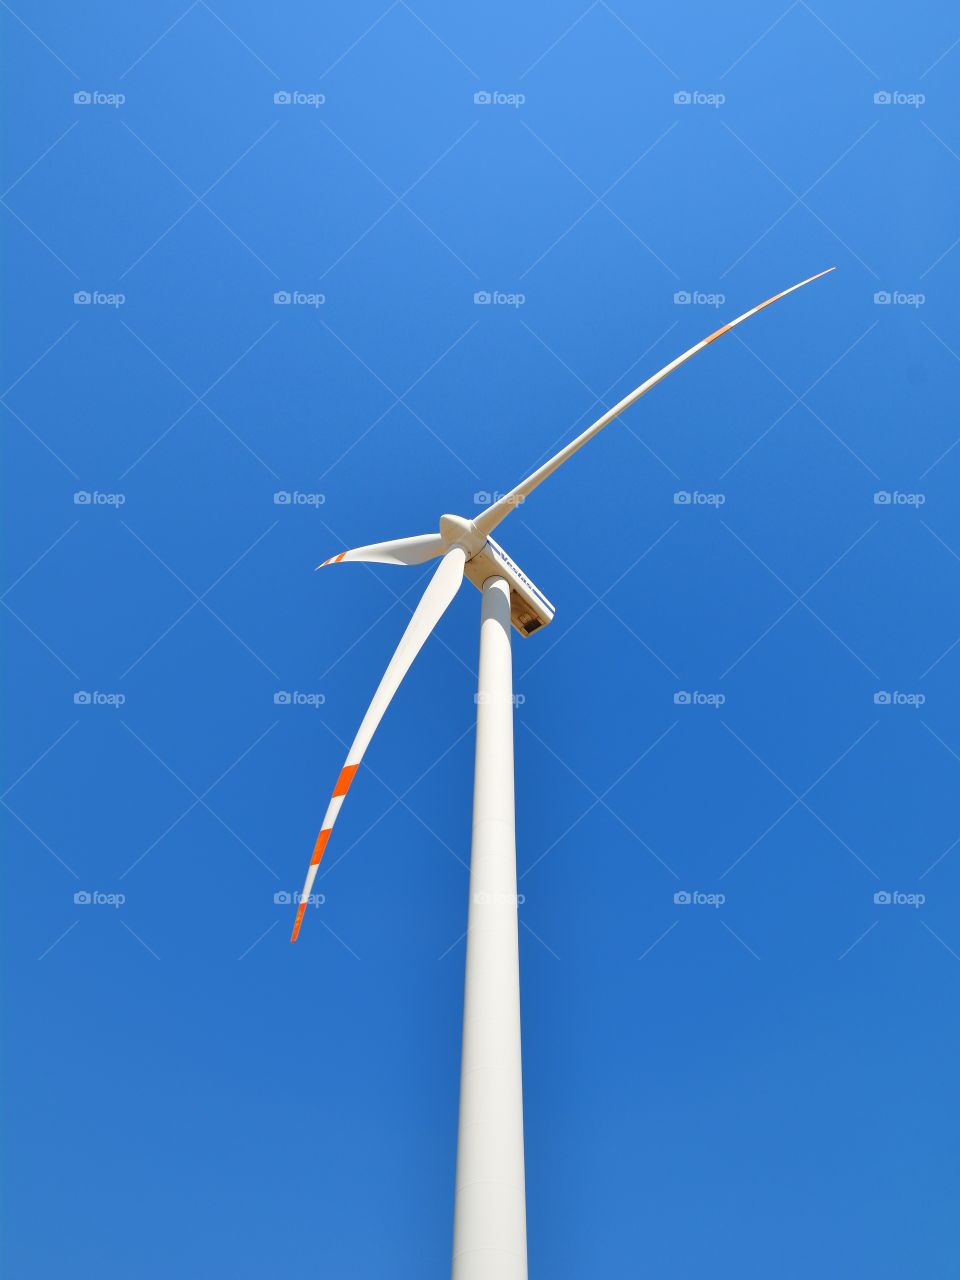 Windmill, wind ecology energy